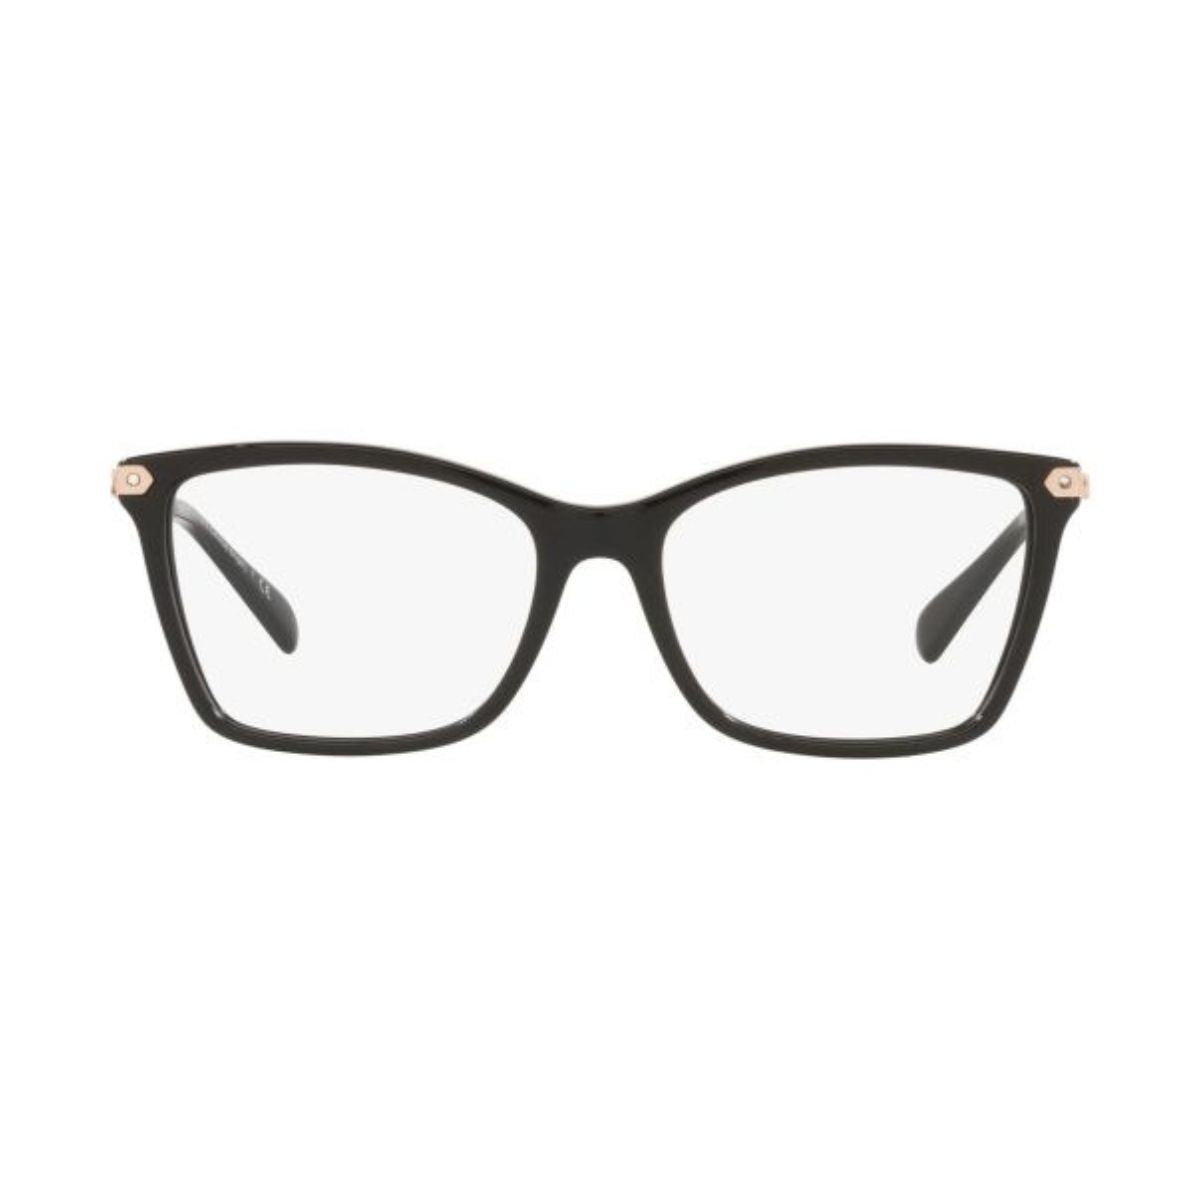 "buy Michael Kors 4087B 3009 women's eyeglasses frame online at optorium"